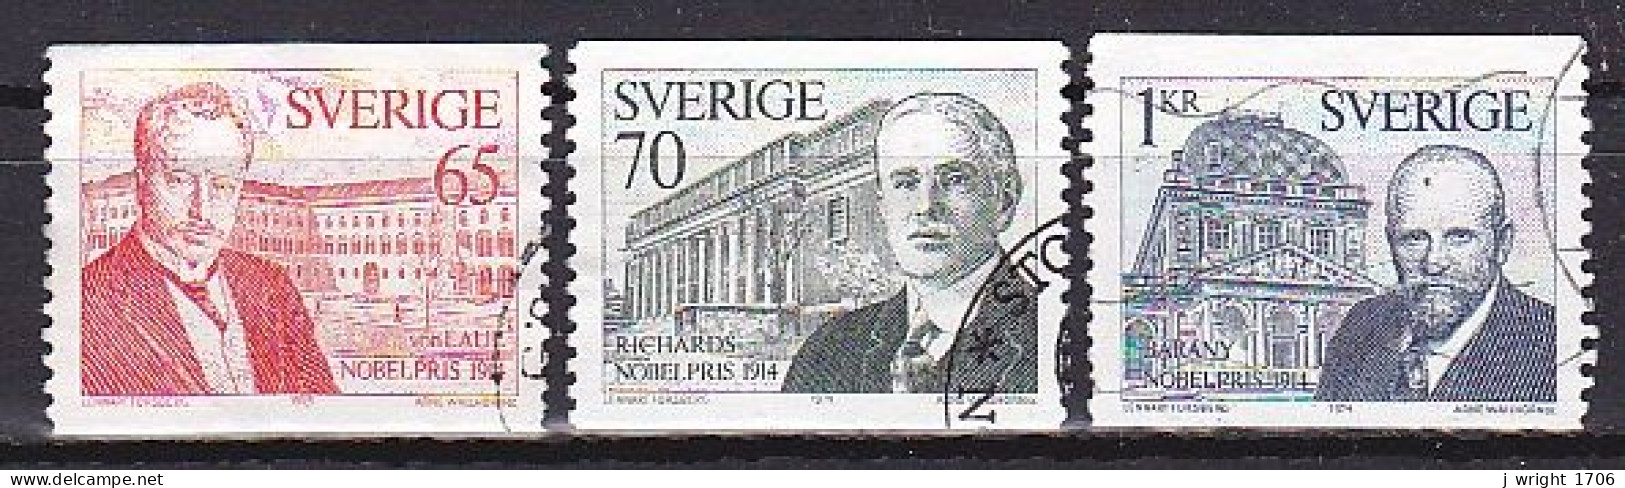 Sweden, 1974, Nobel Prize Winners 1914, Set, USED - Used Stamps